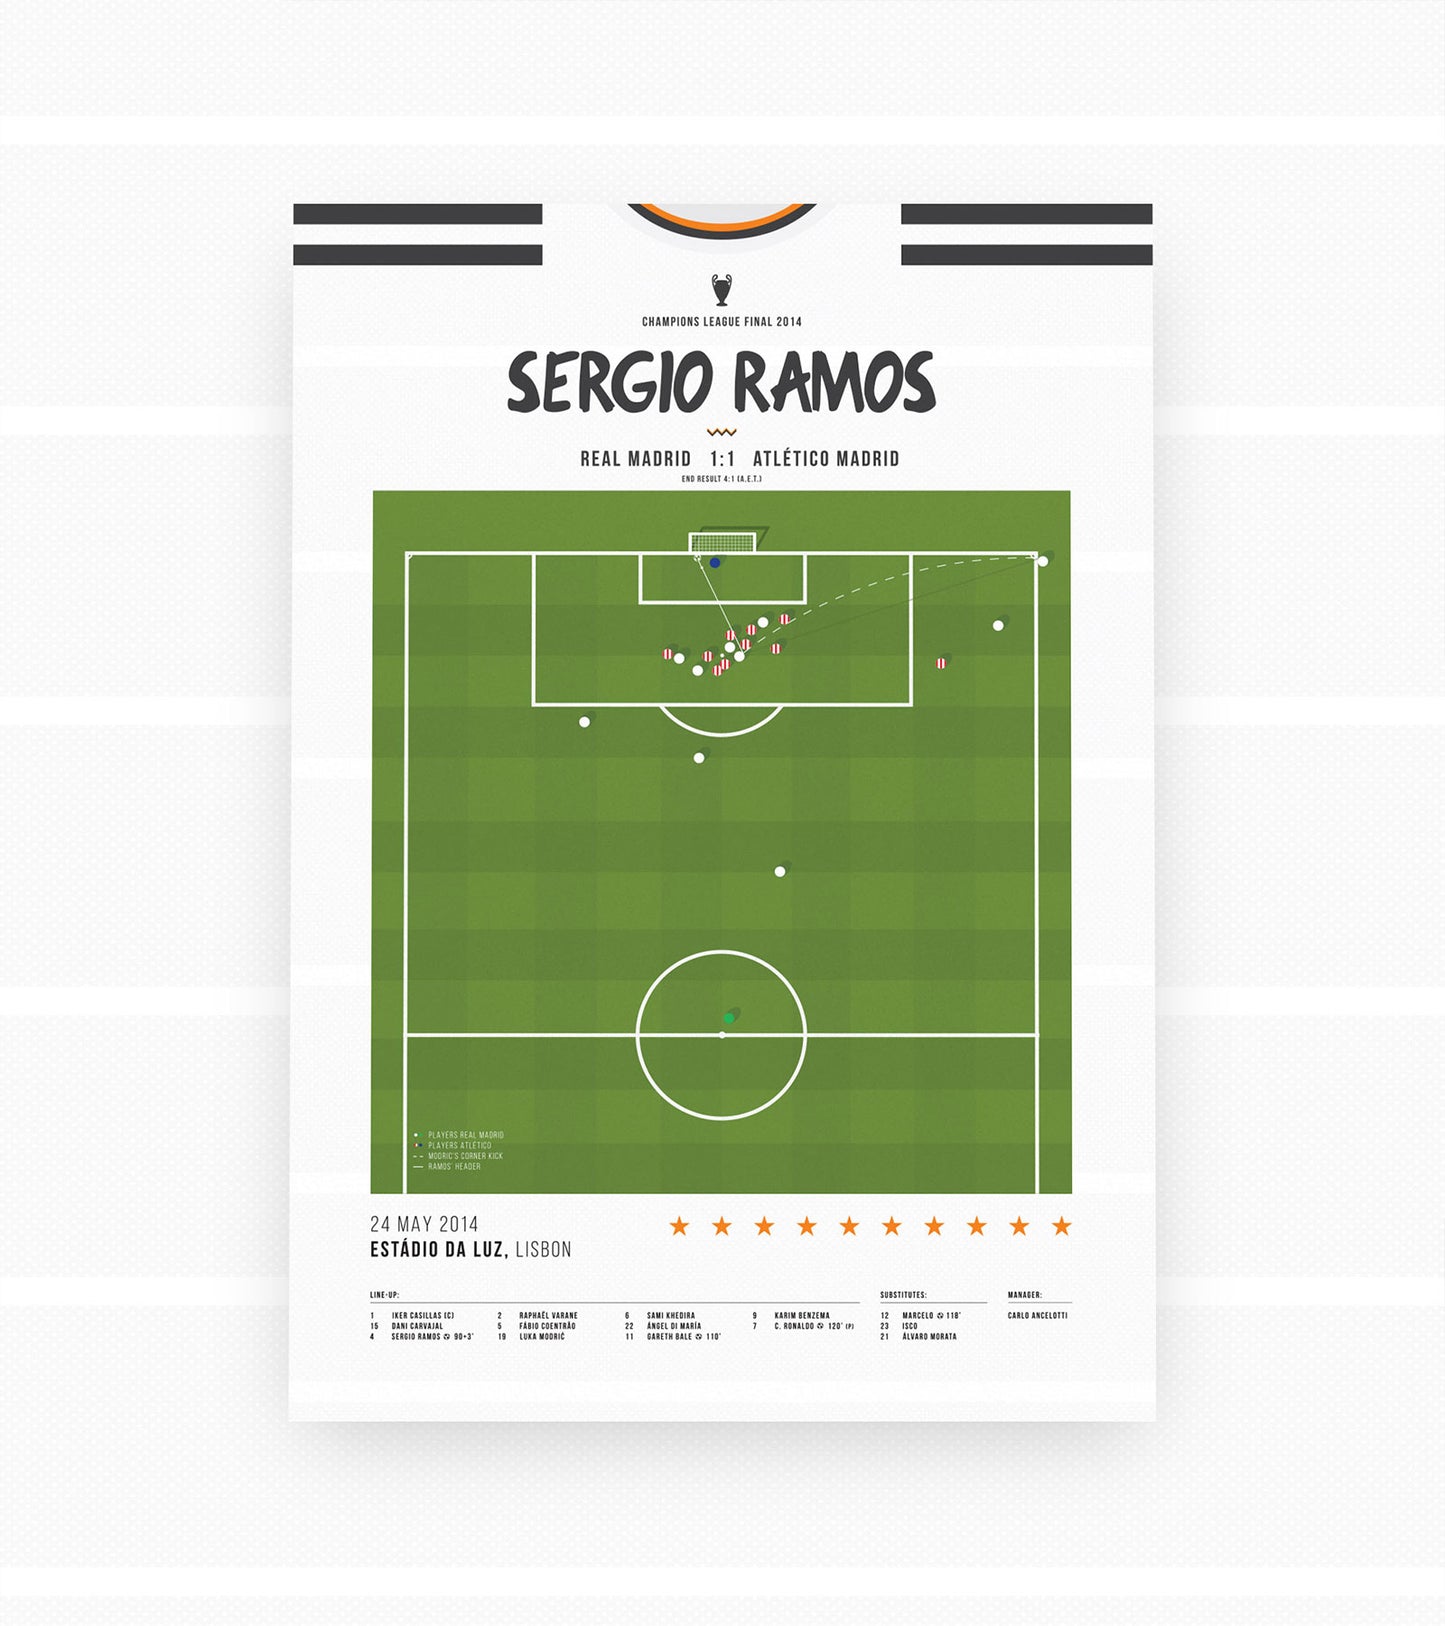 Sergio Ramos' "La Décima" goal